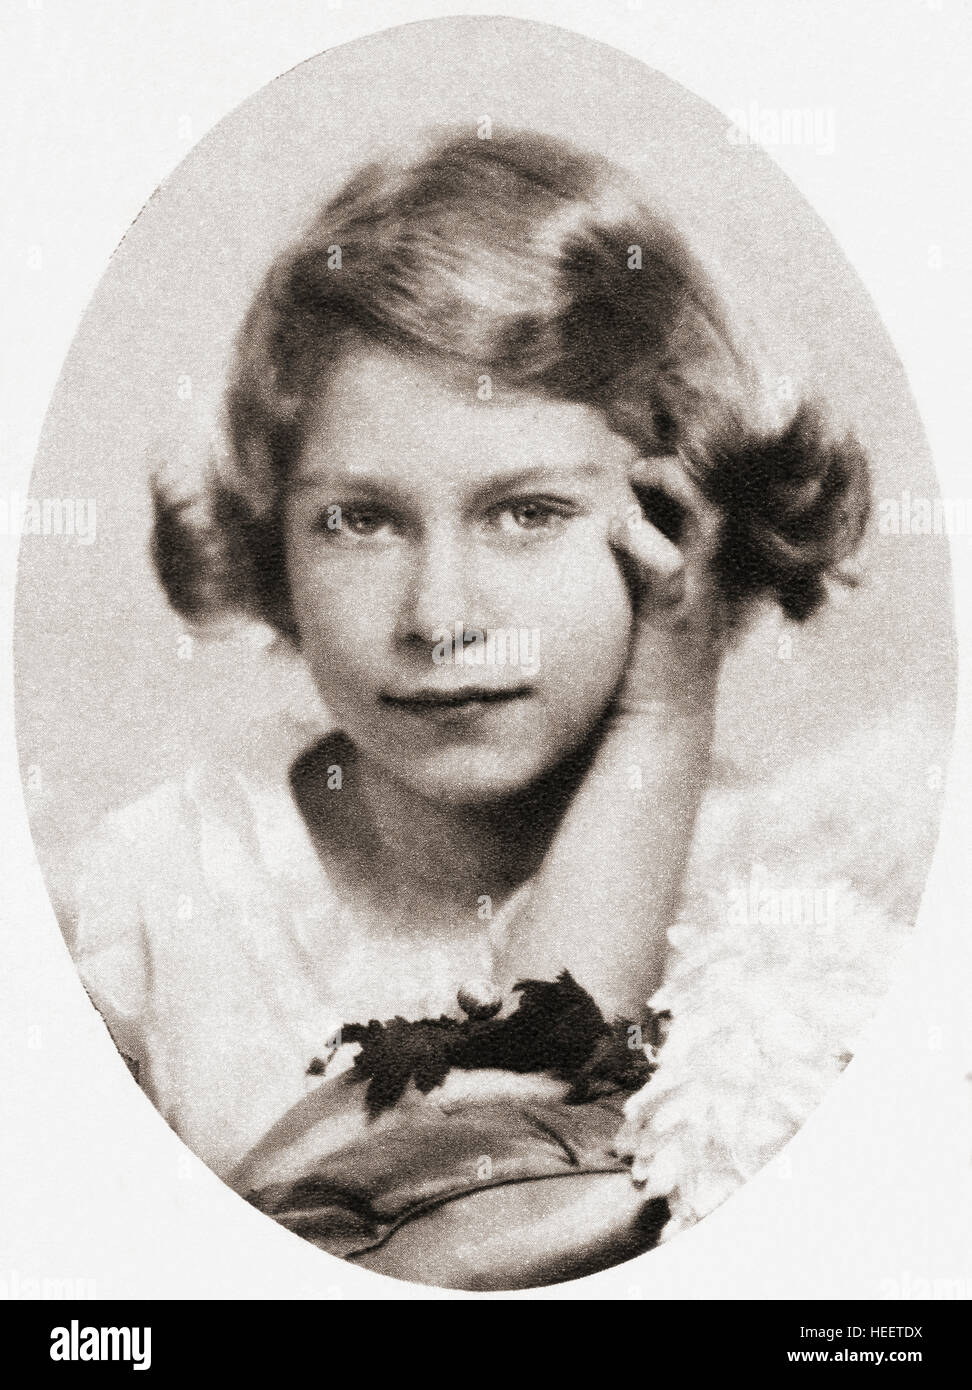 Princess Elizabeth, future Queen Elizabeth II, seen here aged nine.  Elizabeth II, 1926 - 2022.  Queen of the United Kingdom, Canada, Australia and New Zealand. Stock Photo